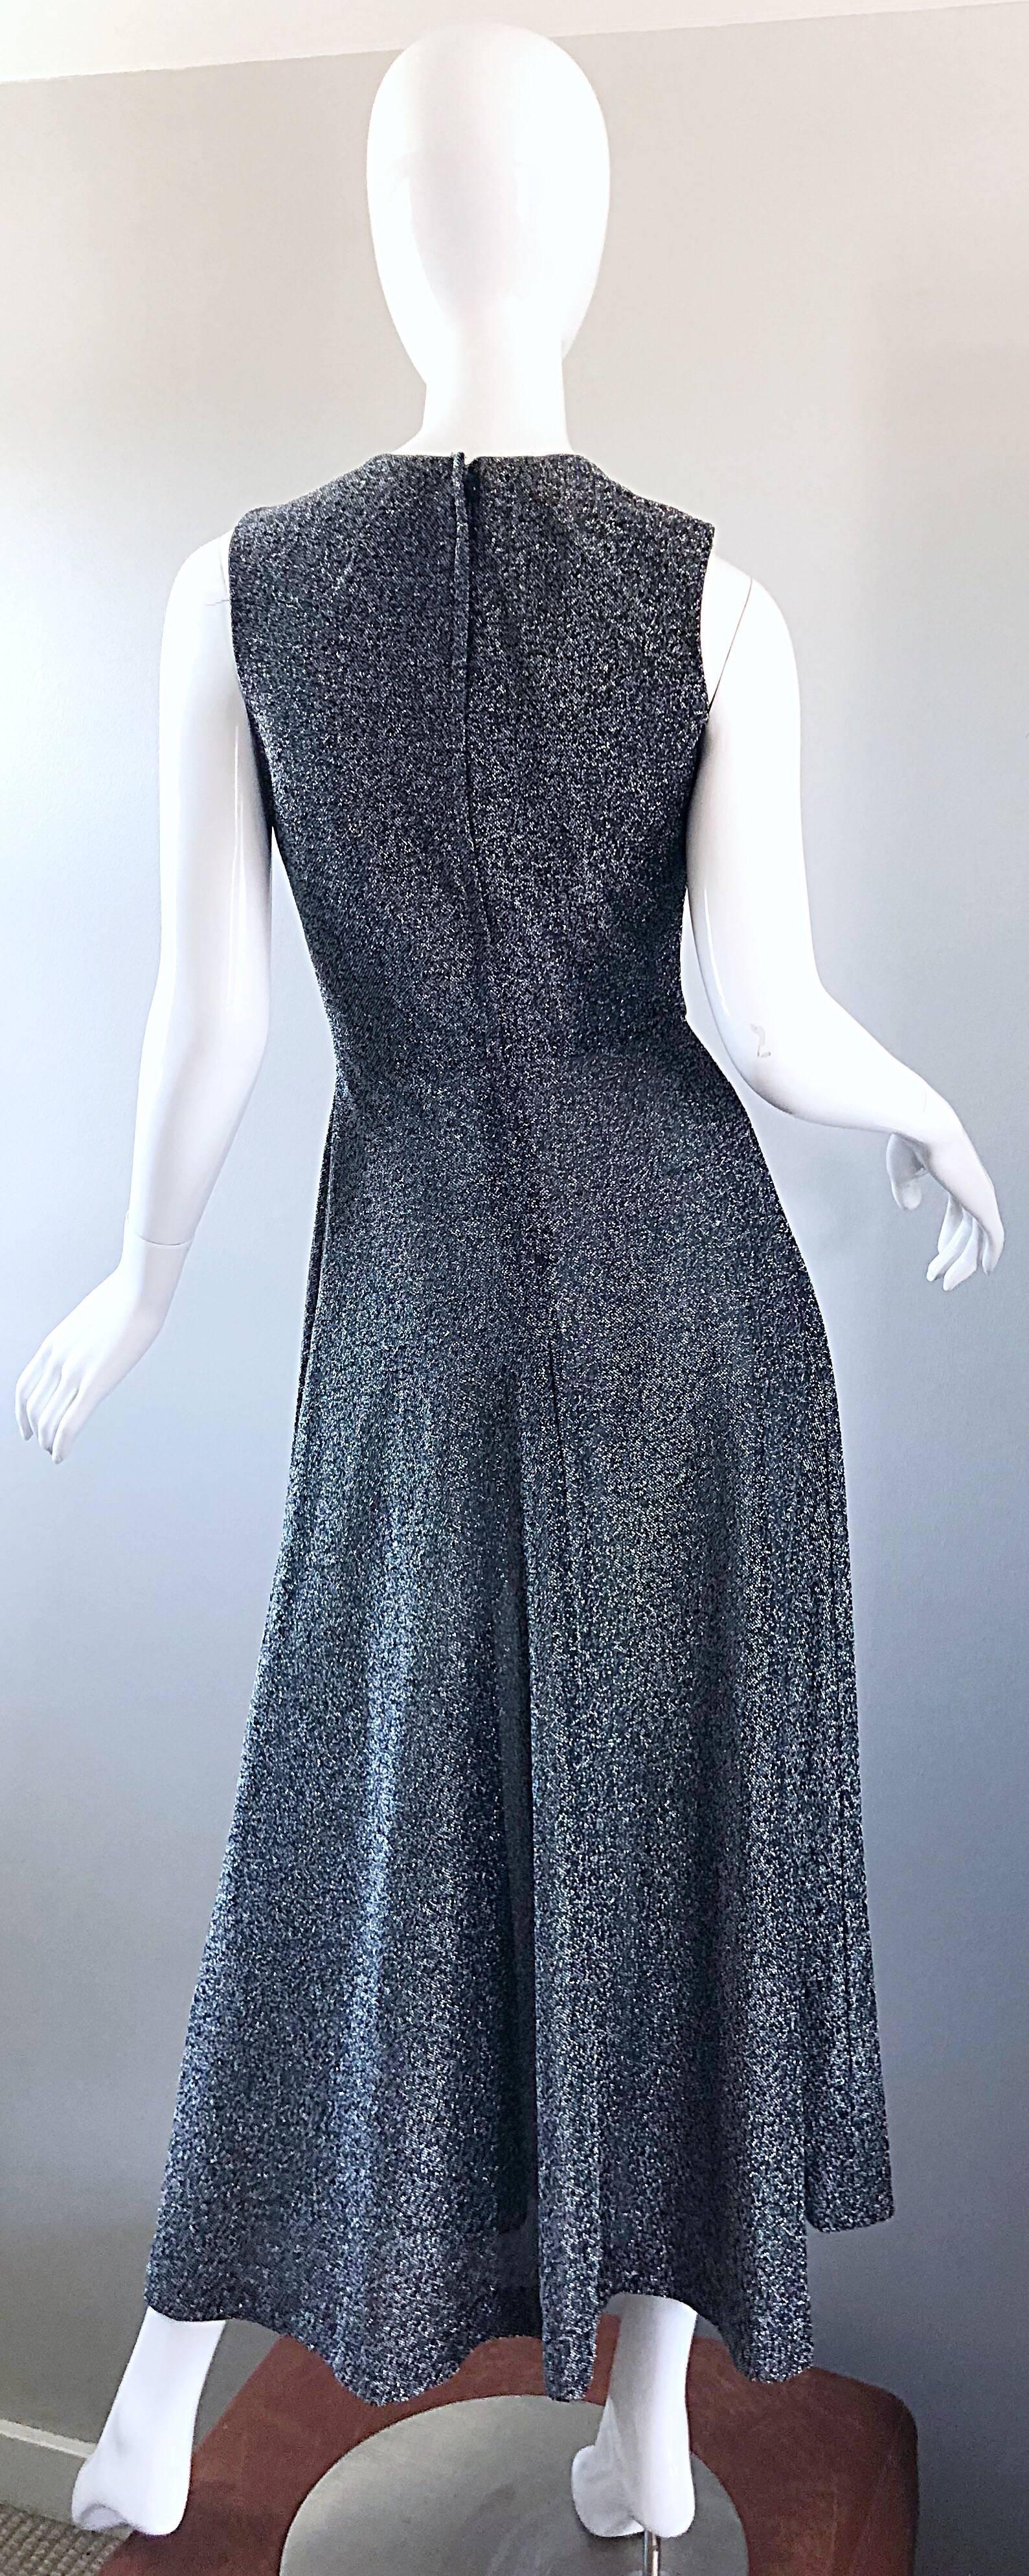 Black Amazing 1970s Gunmetal Grey + Silver Lurex Metallic Vintage 70s Maxi Dress Gown